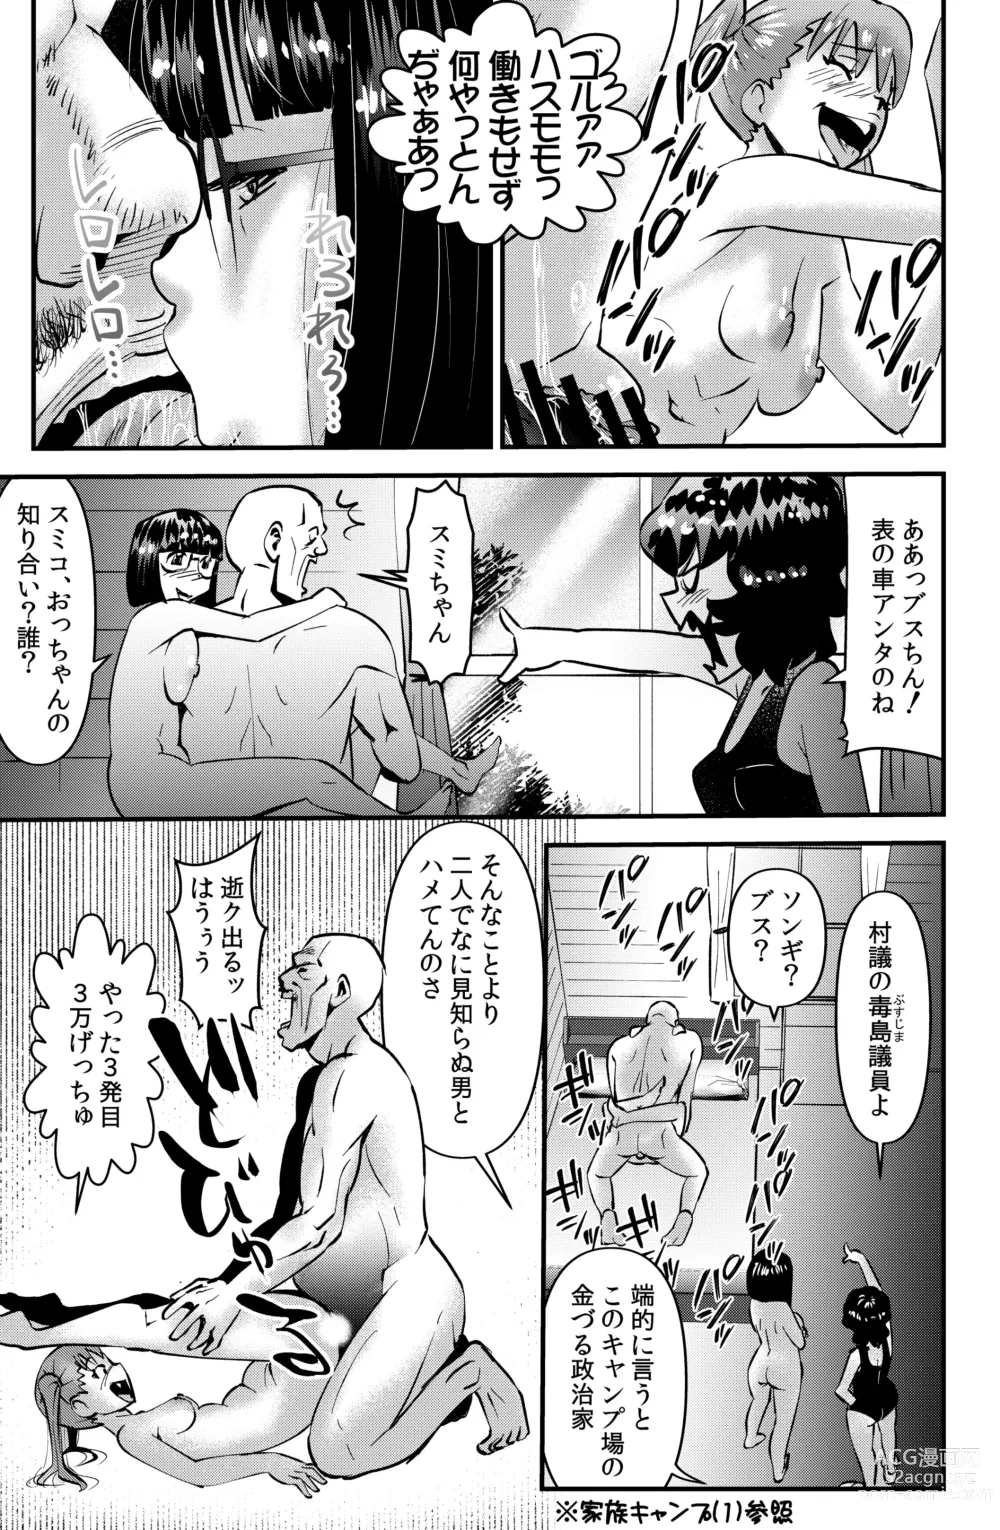 Page 17 of doujinshi Kazoku Camp 2